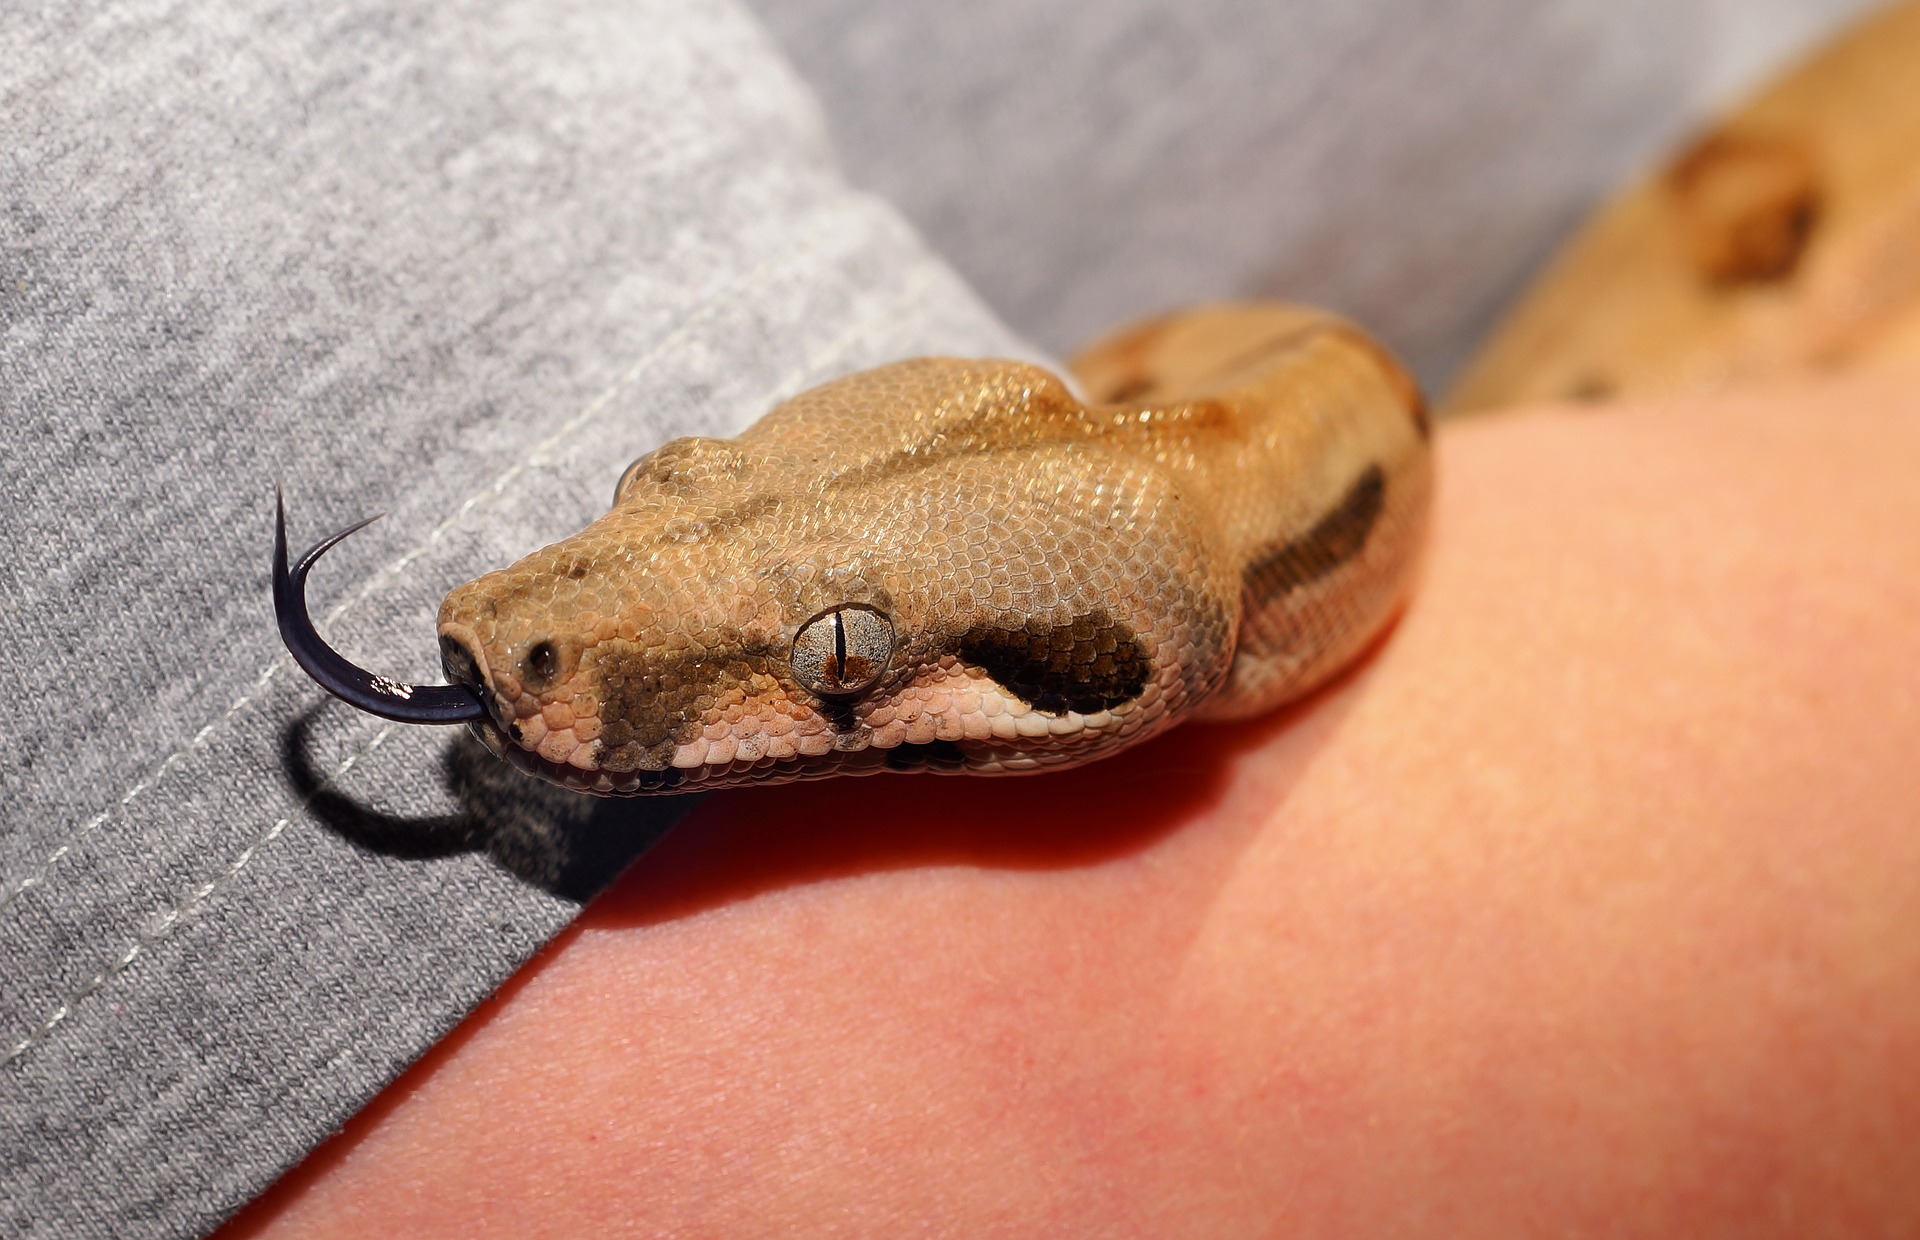 Pet snake on arm